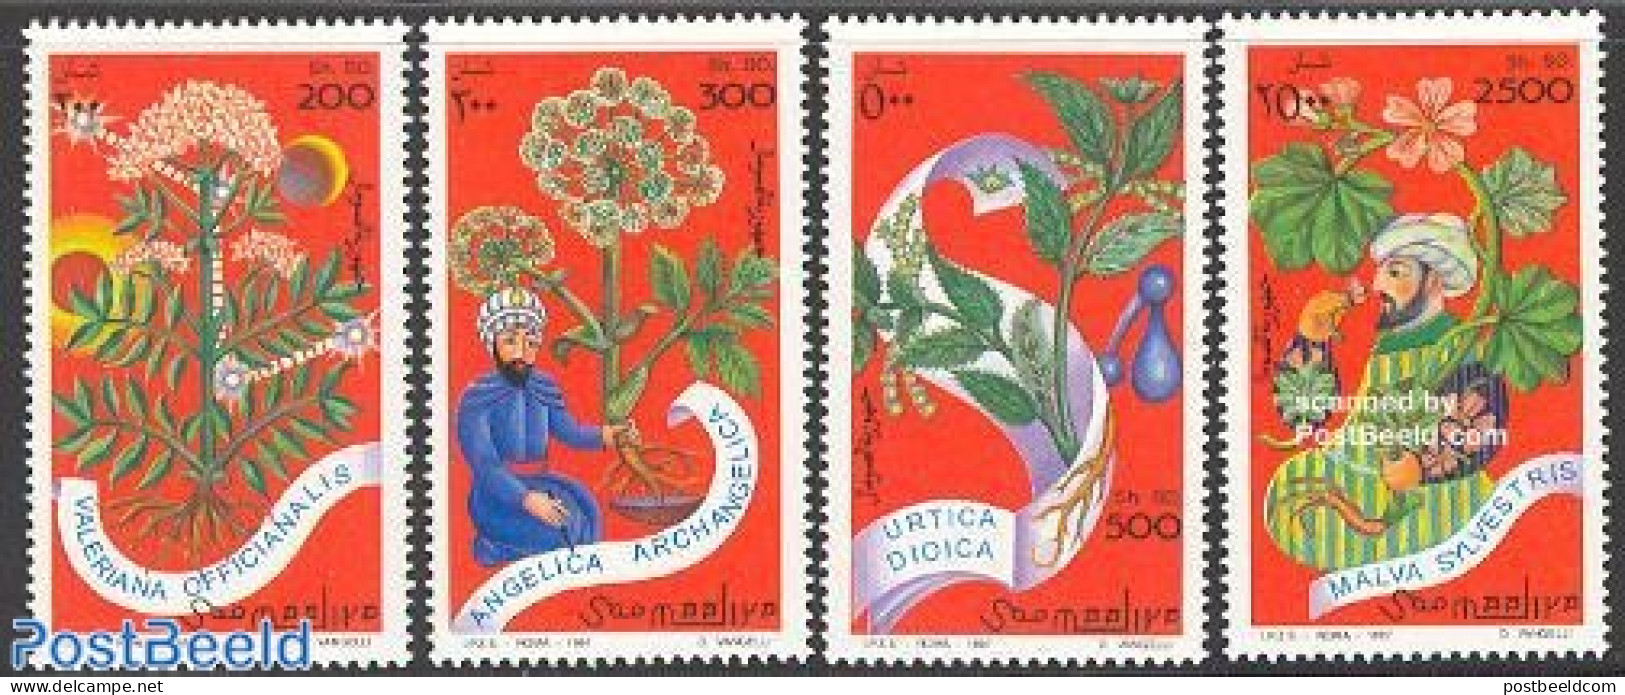 Somalia 1997 Medical Plants 4v, Mint NH, Health - Nature - Health - Flowers & Plants - Somalia (1960-...)